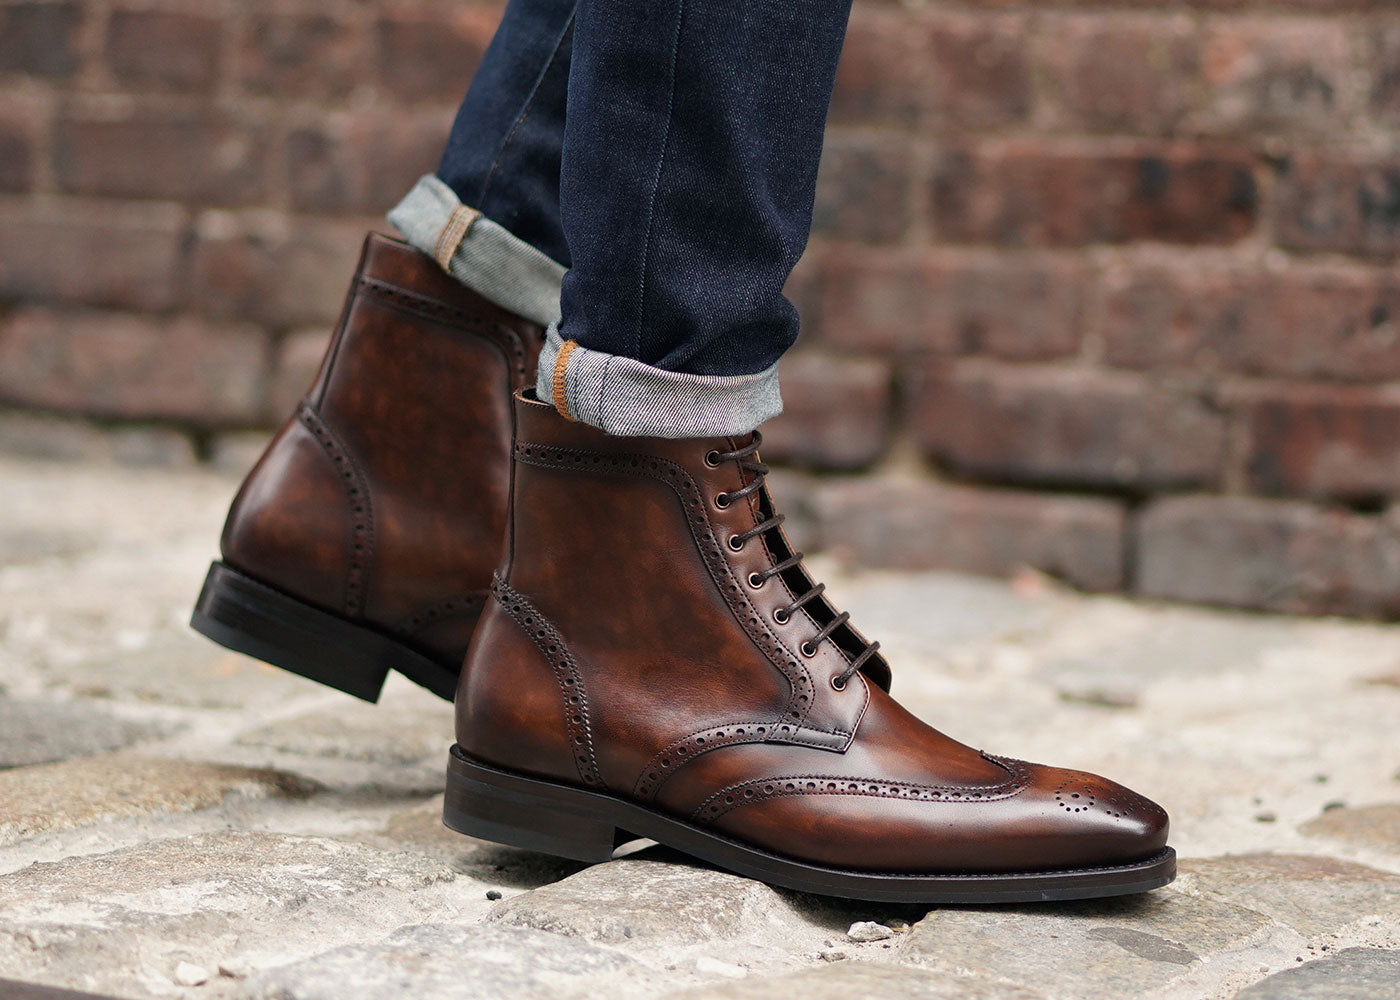 Best Men's Fashion Boot: Thursday Boot Company Color #77 Wingtip